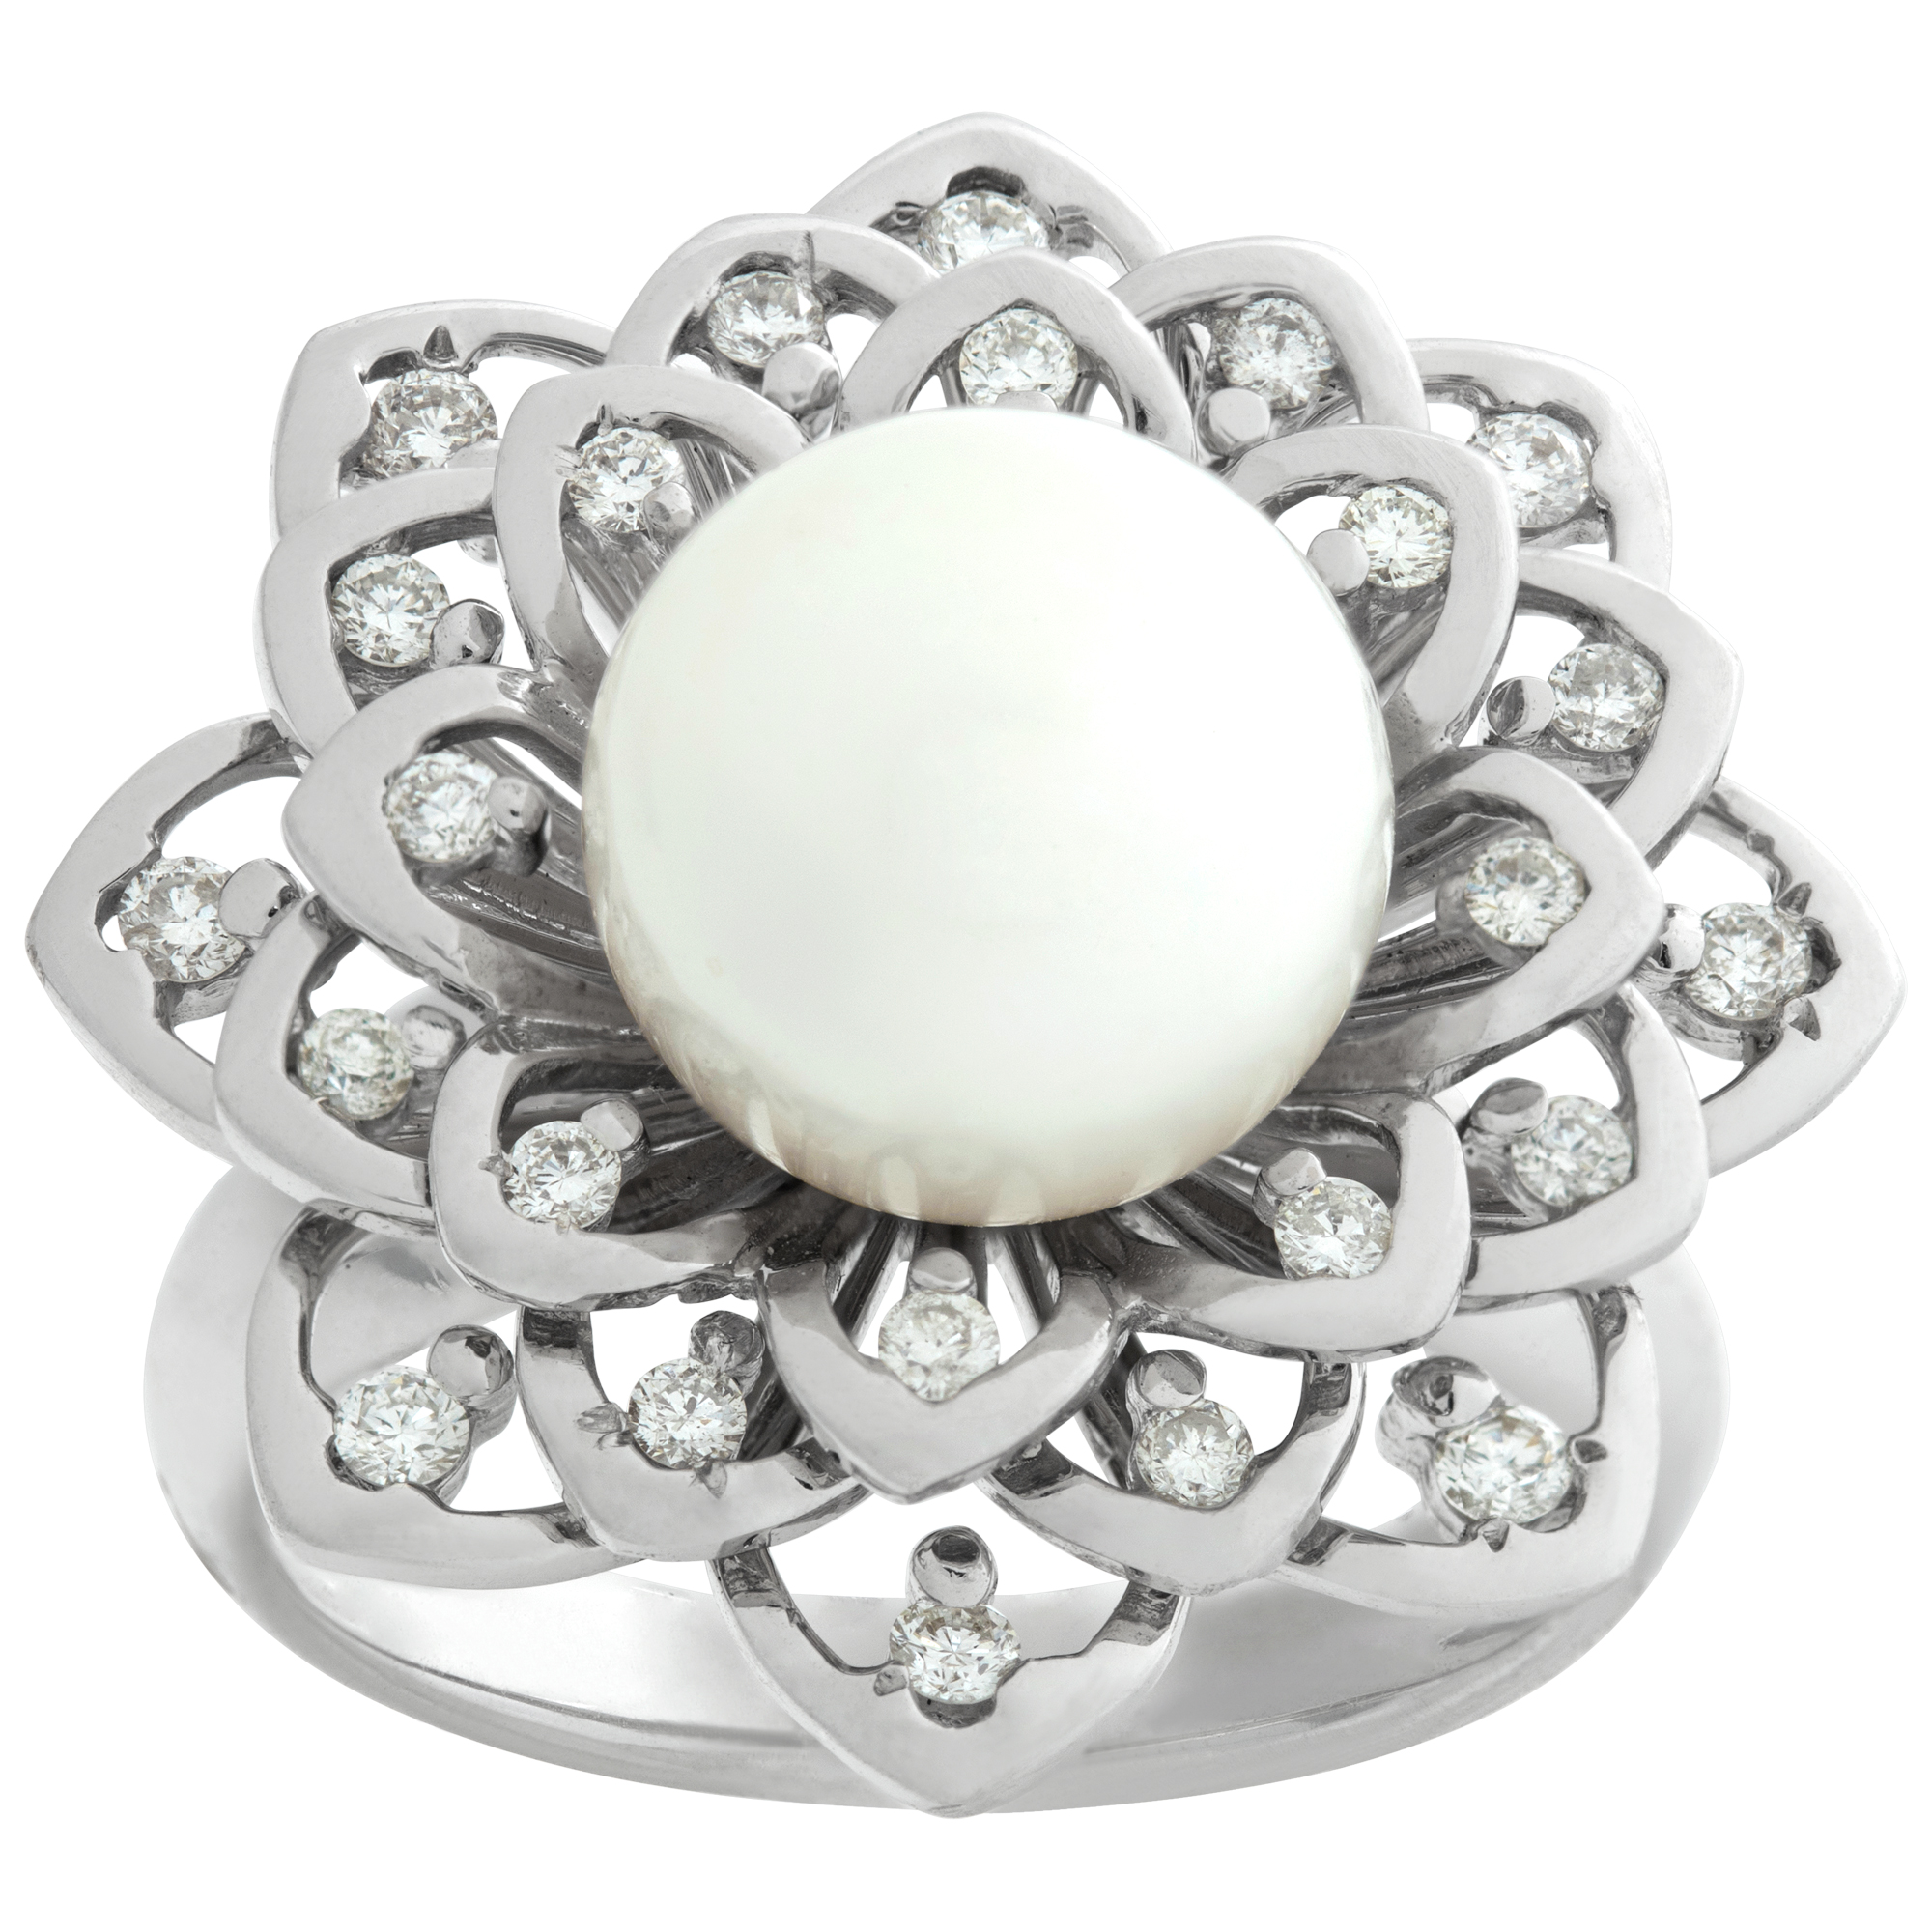 Sparkling diamond & pearl flower ring in 18k white gold. 0.39 carat in diamonds